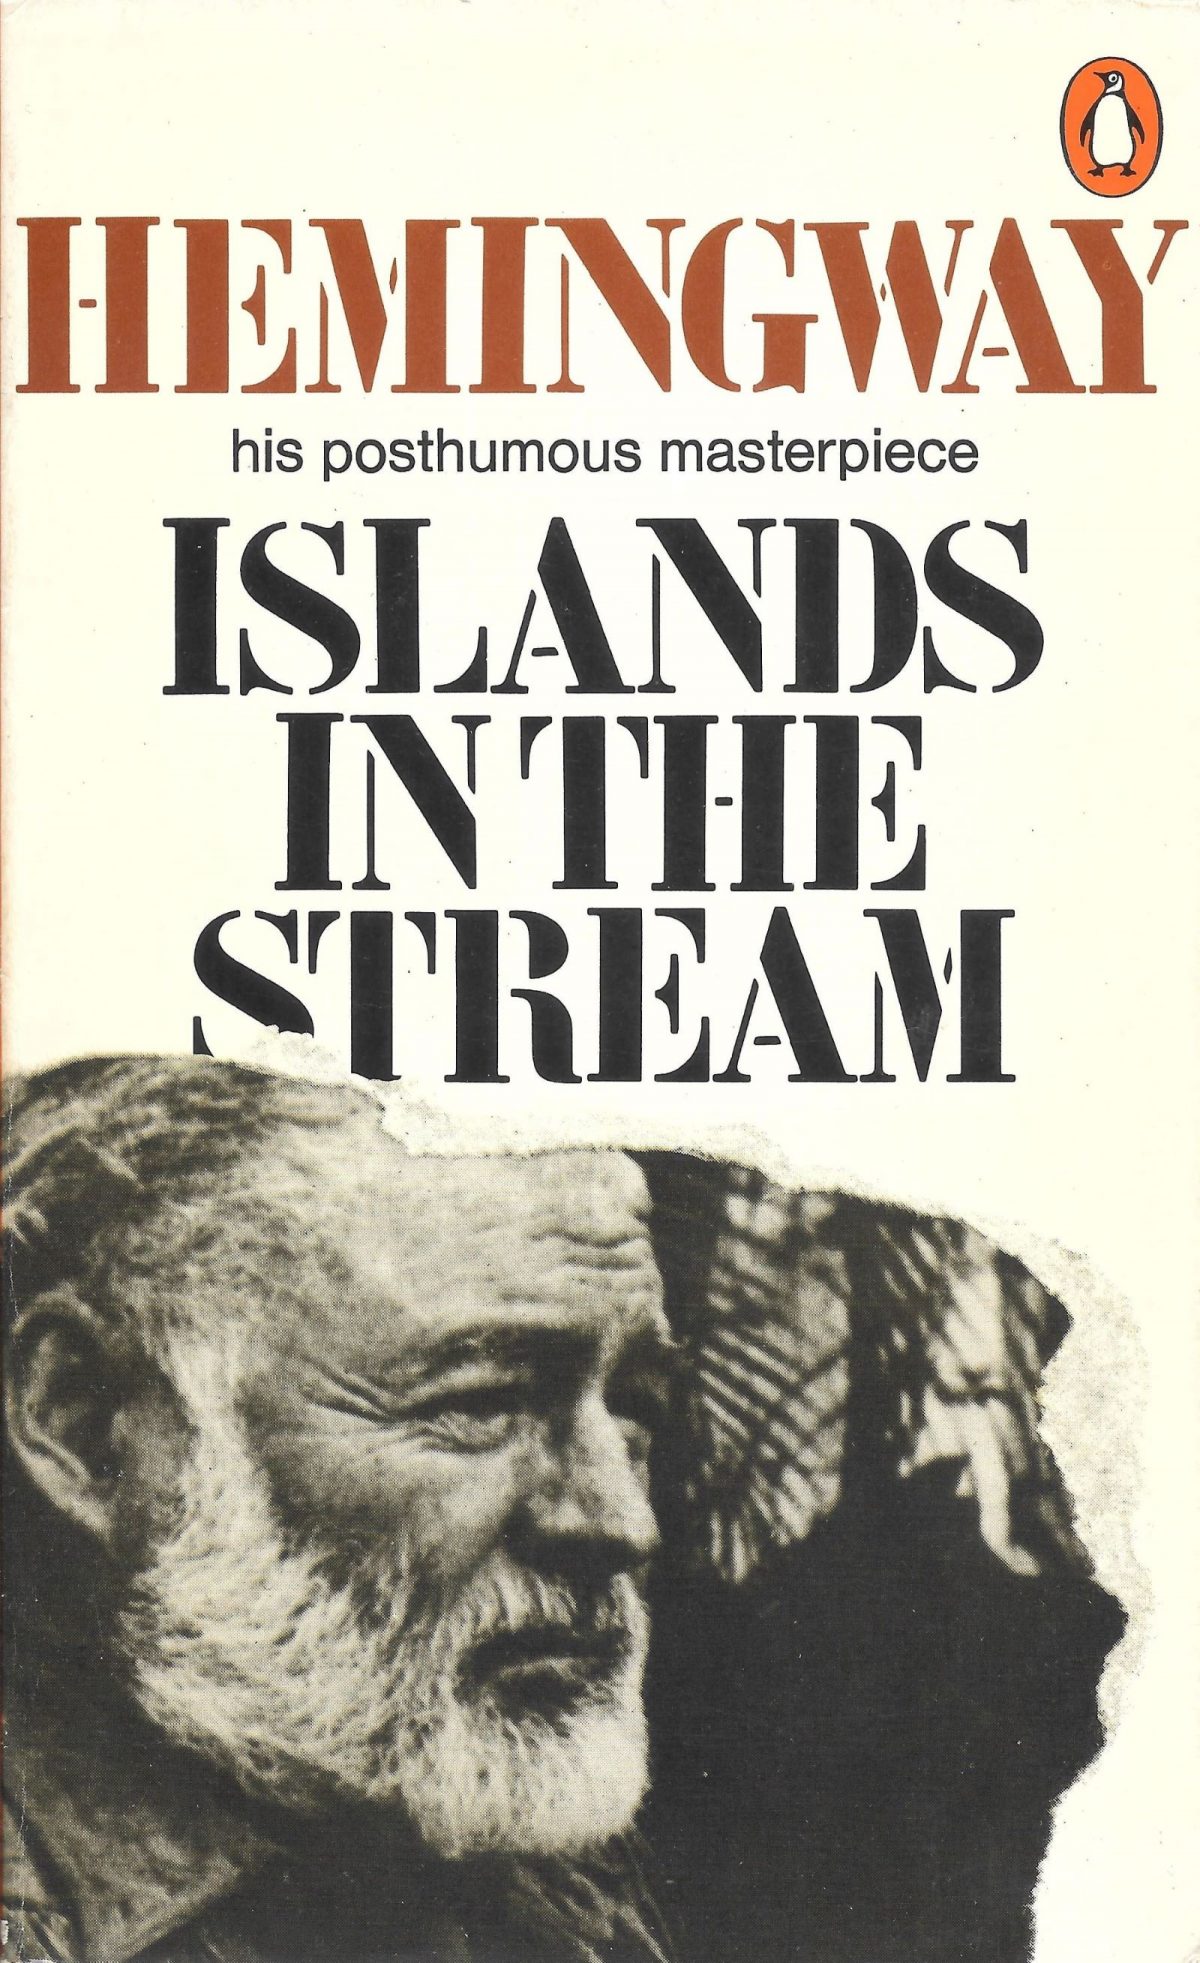 Ernest Hemingway, books, literature, design, book covers,